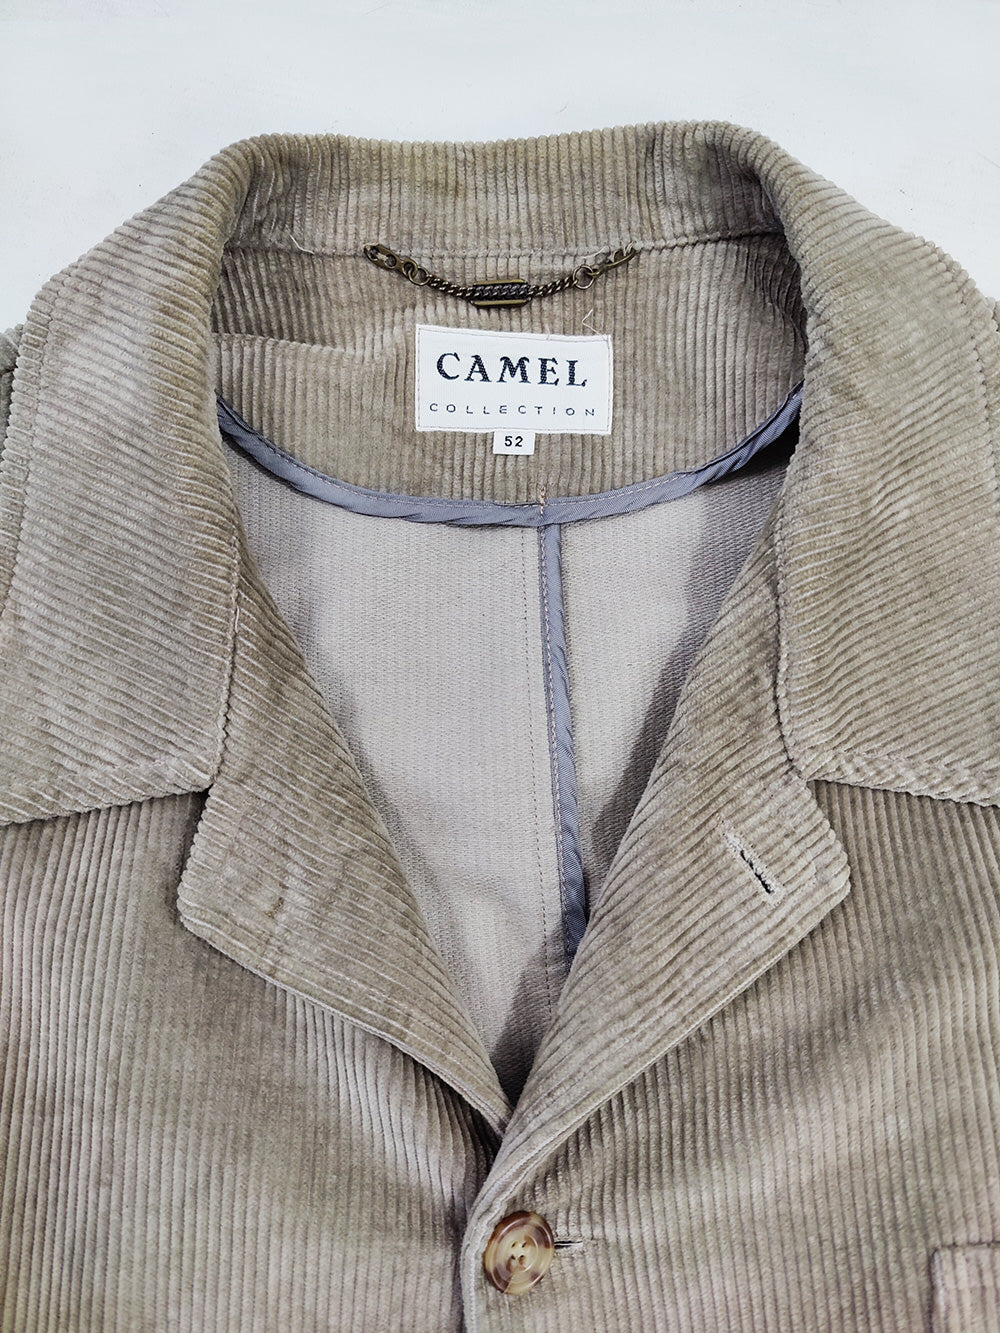 Camel Collection Vintage Mens Corduroy Overcoat, 1990s